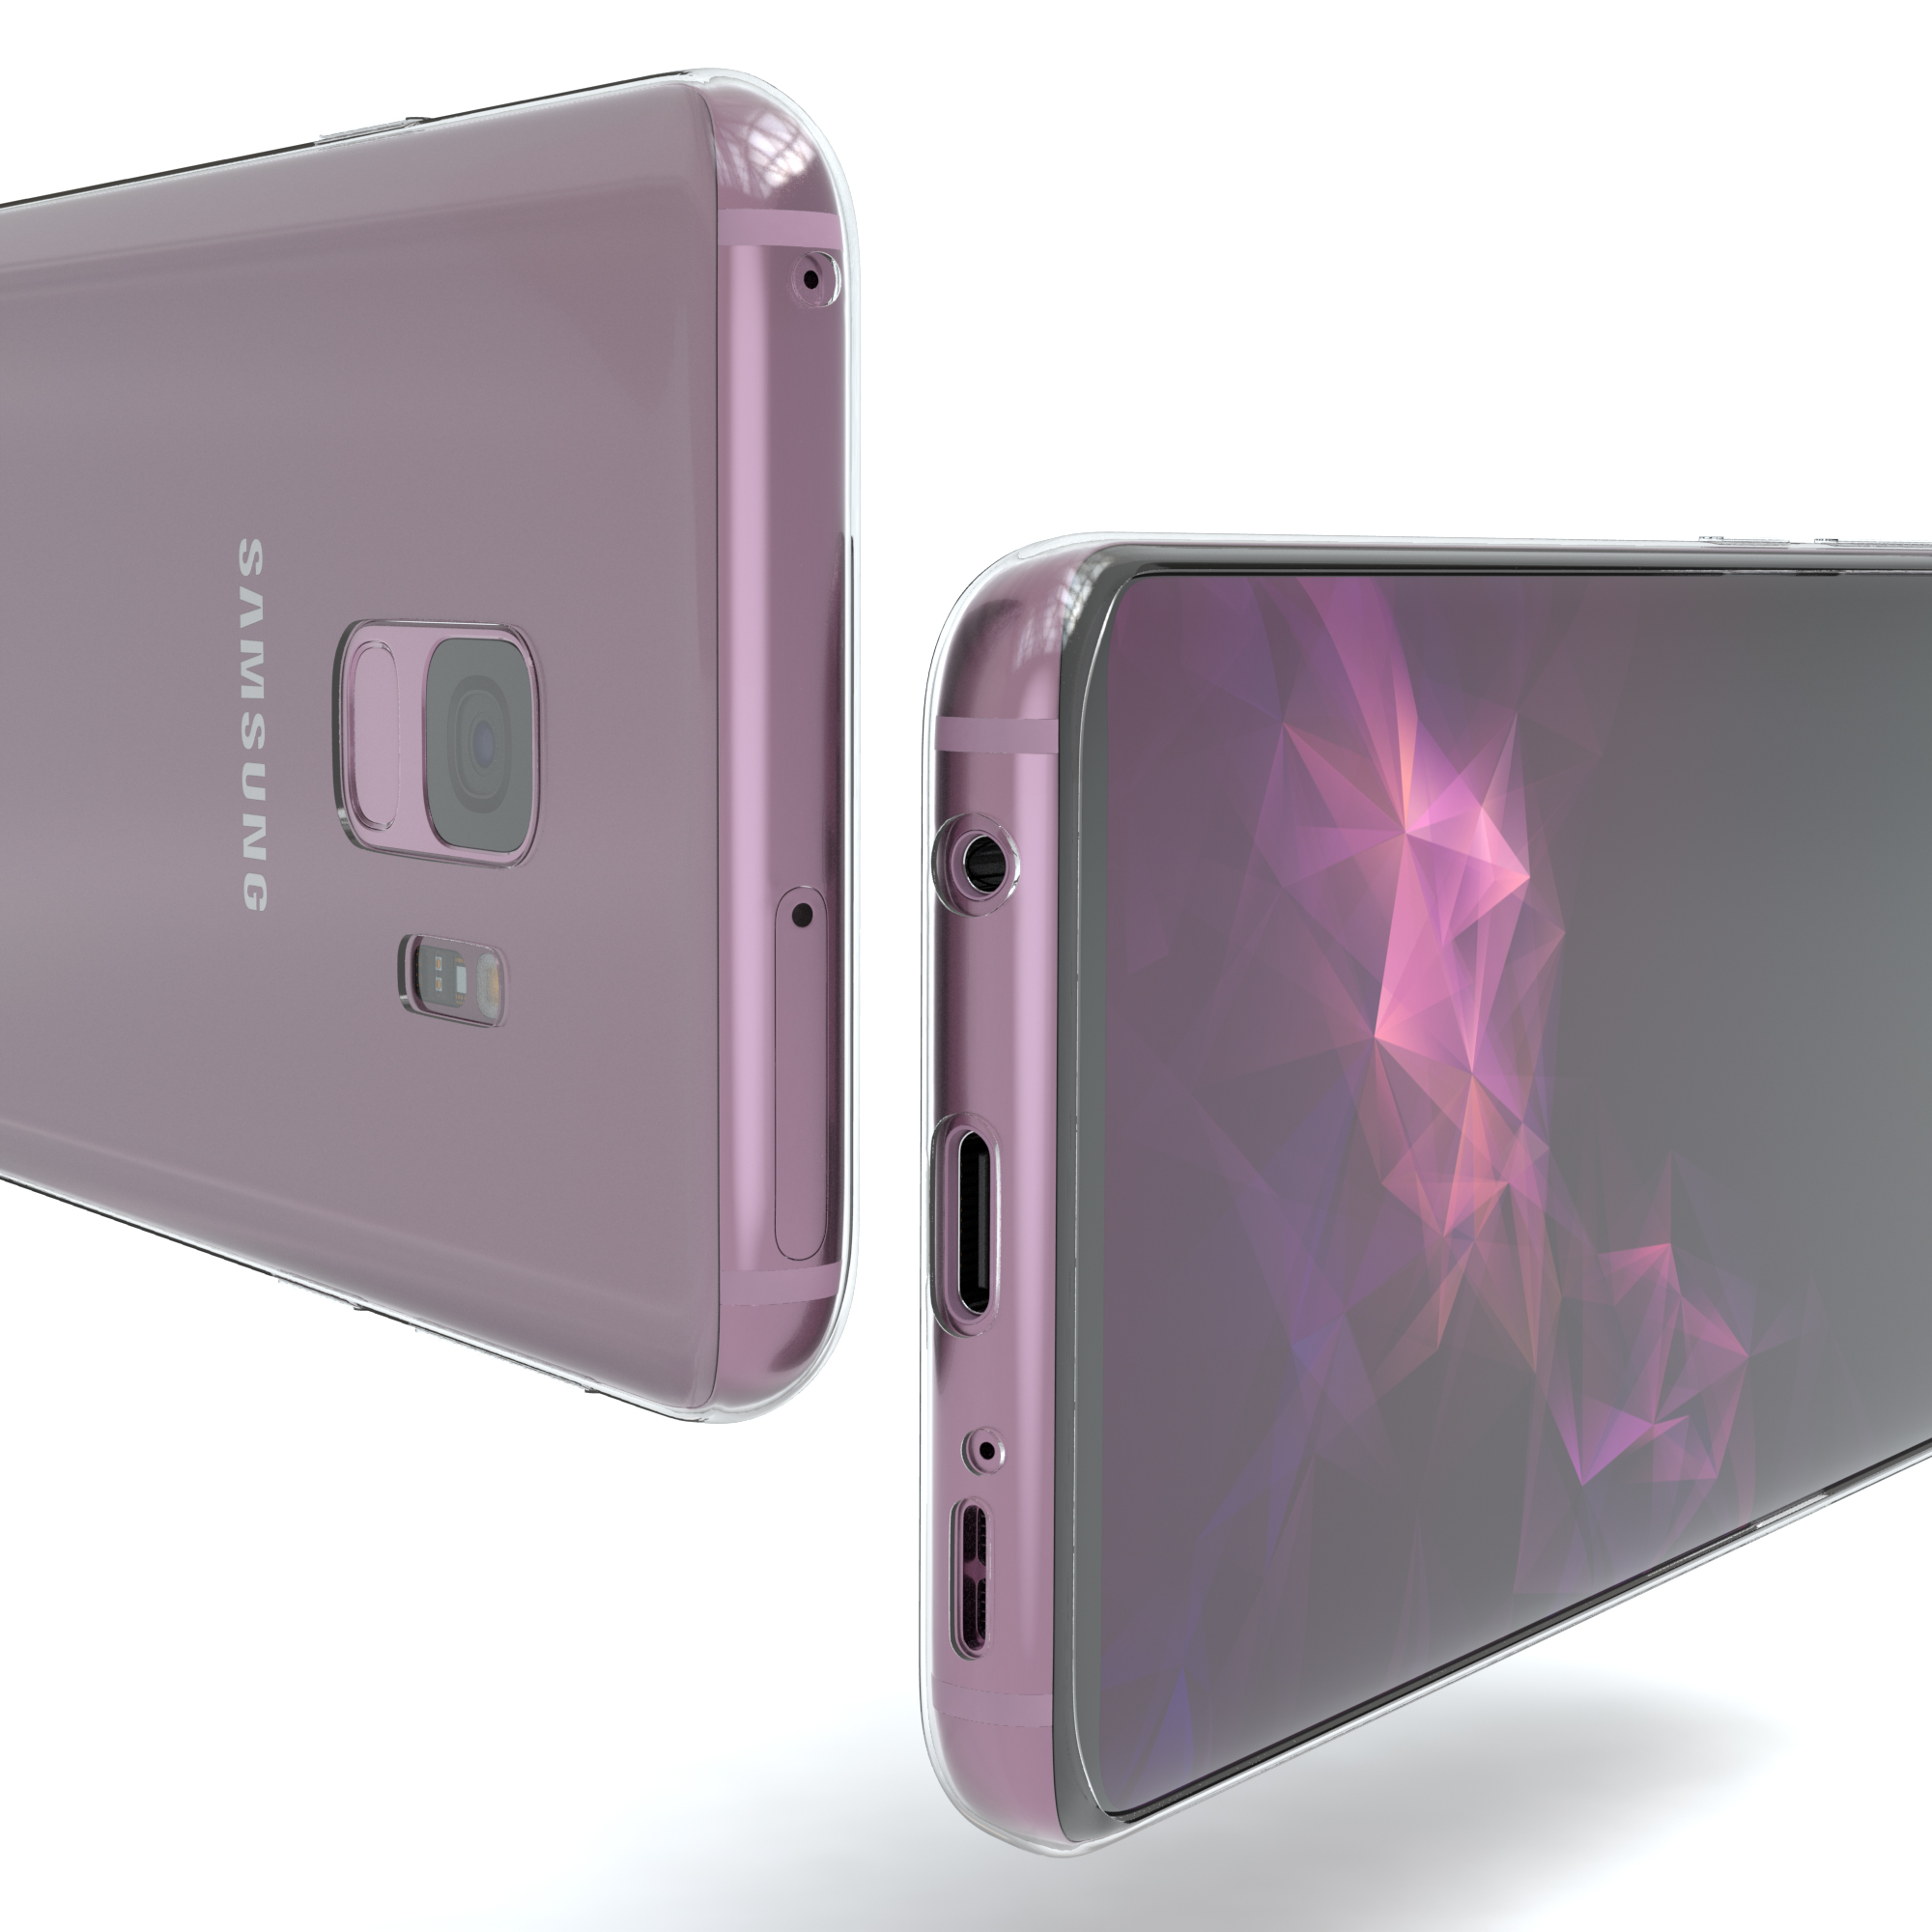 Case, Durchsichtig CASE Samsung, Galaxy Backcover, S9, Clear EAZY